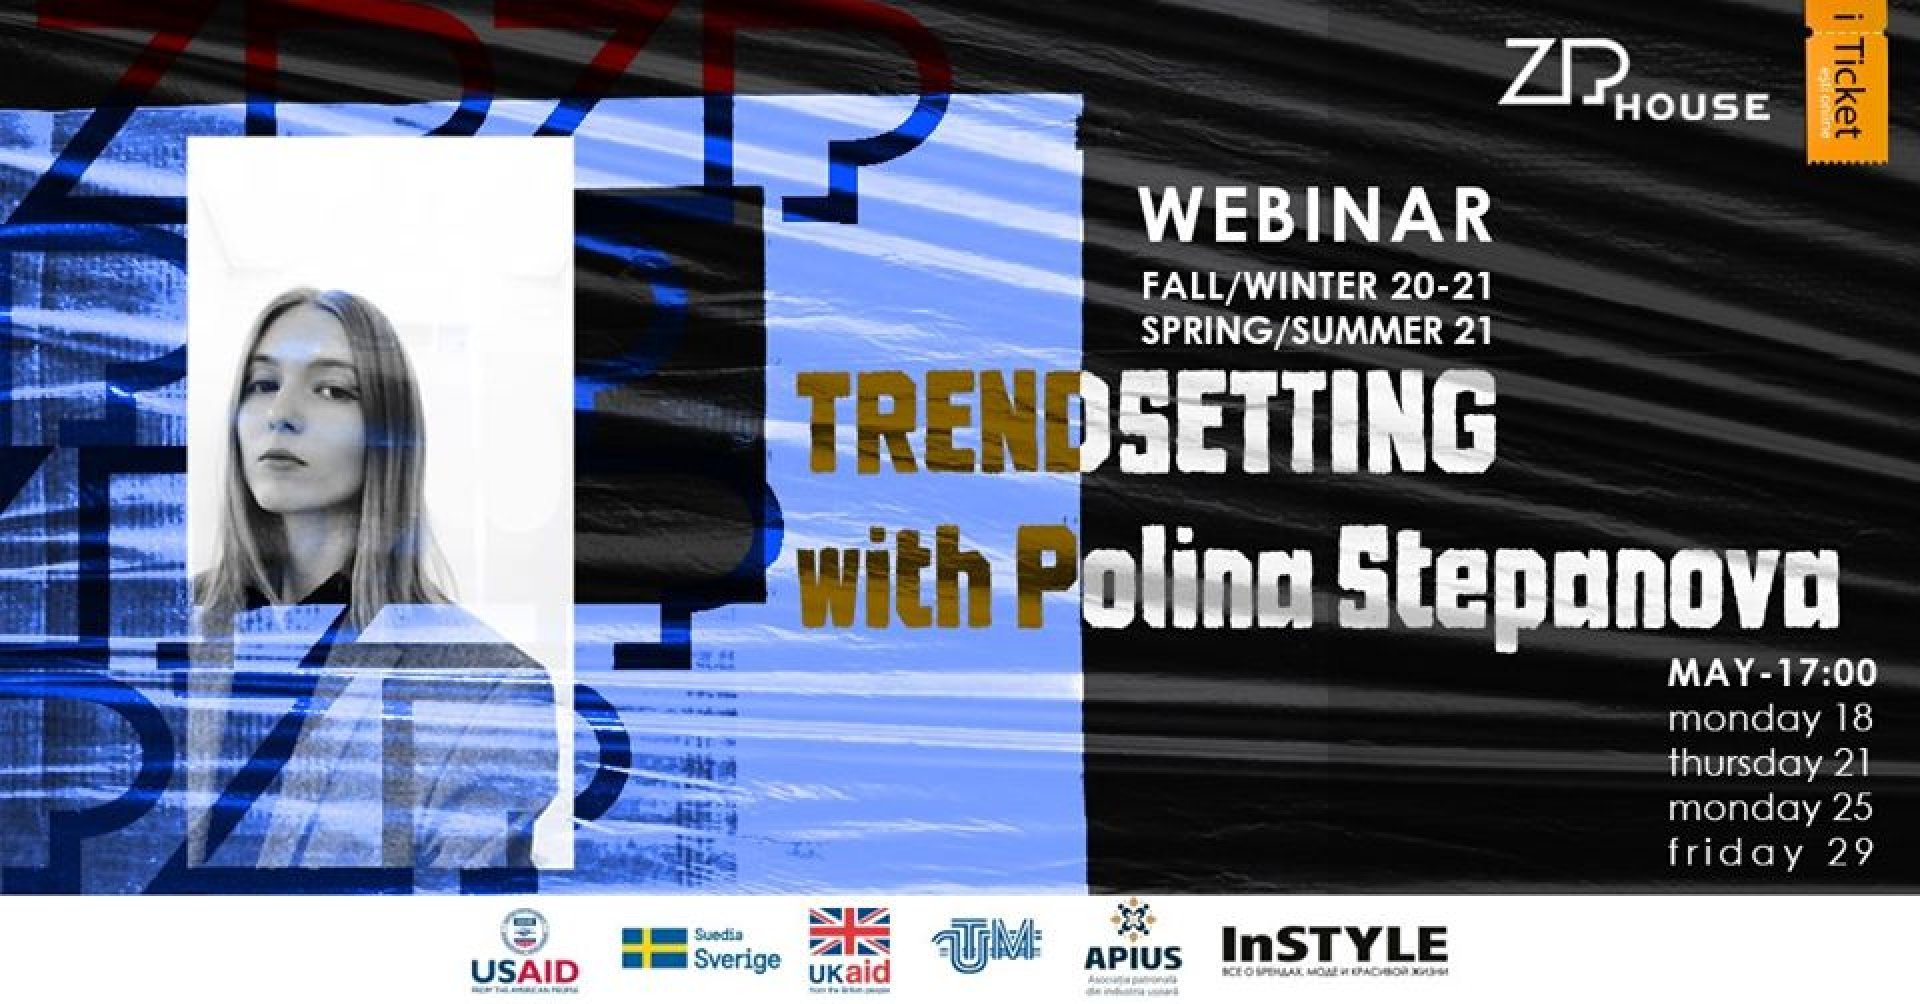 Webinar: Trendsetting with Polina Stepanova